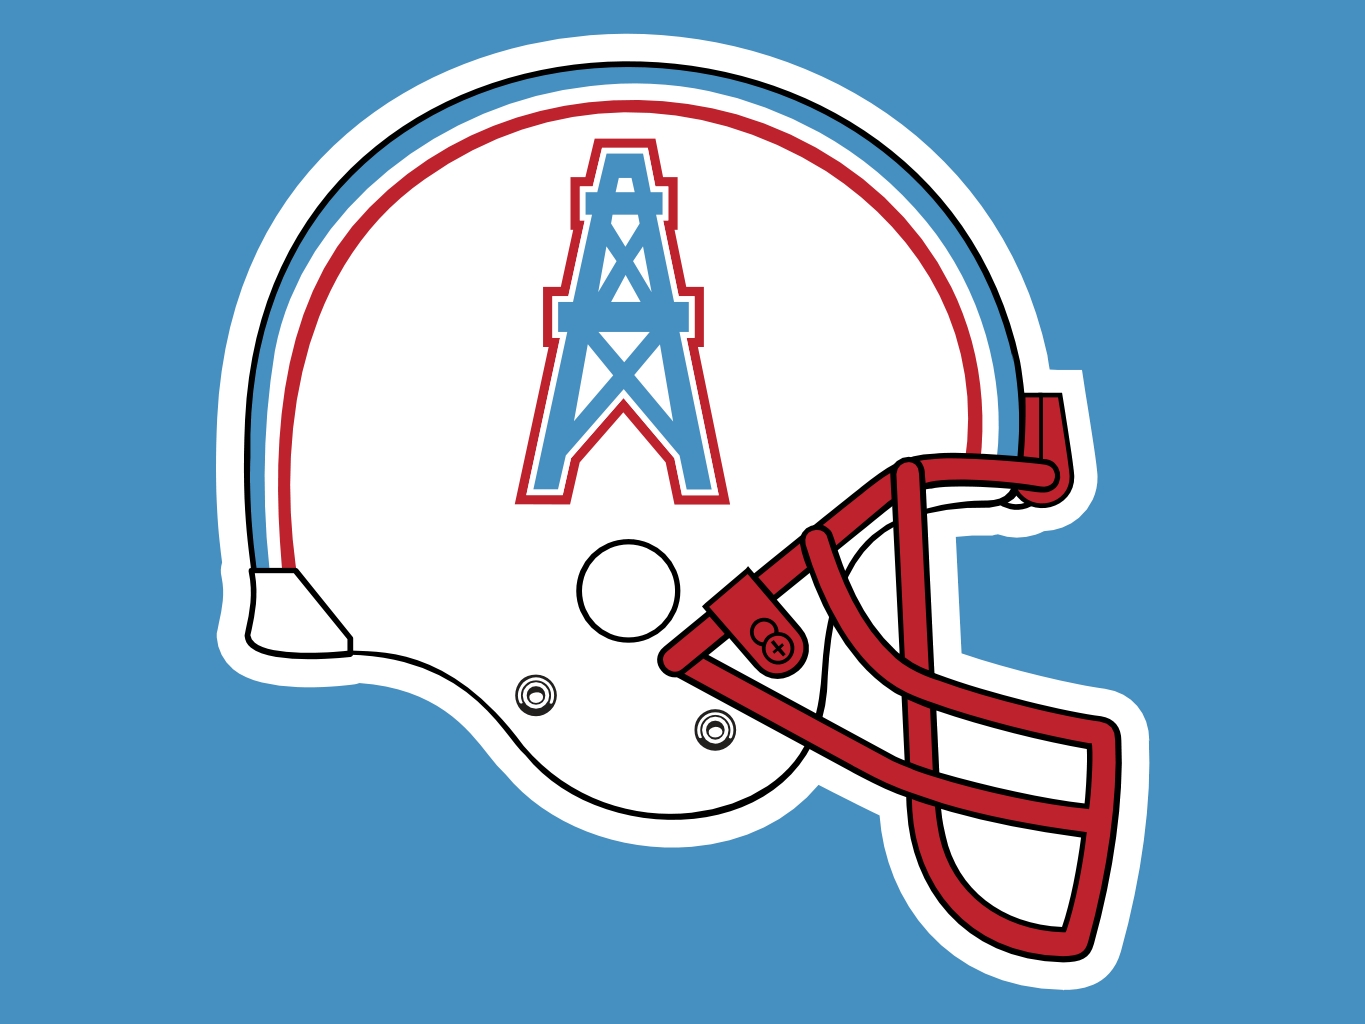 Tennessee Oilers | Pro Sports Teams Wiki | FANDOM powered by Wikia